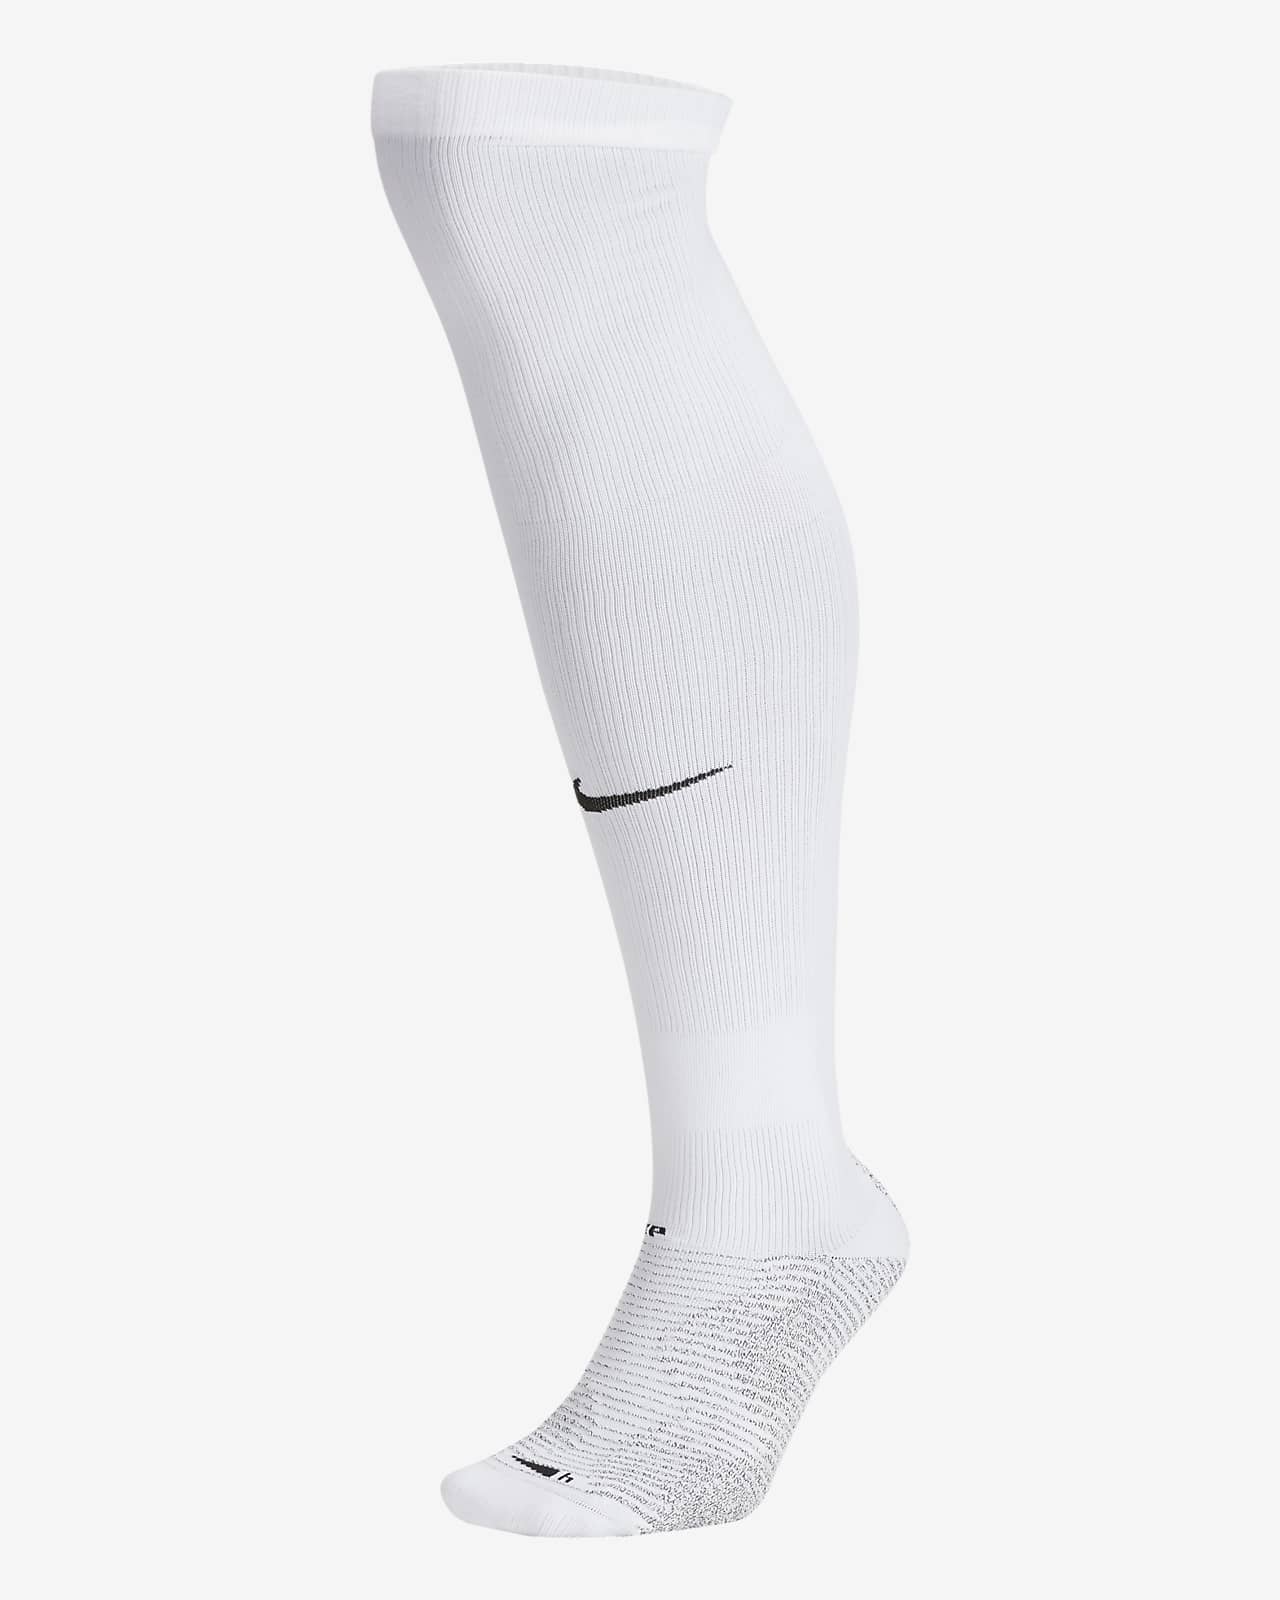 NikeGrip Strike Knee-High Socks. Nike LU